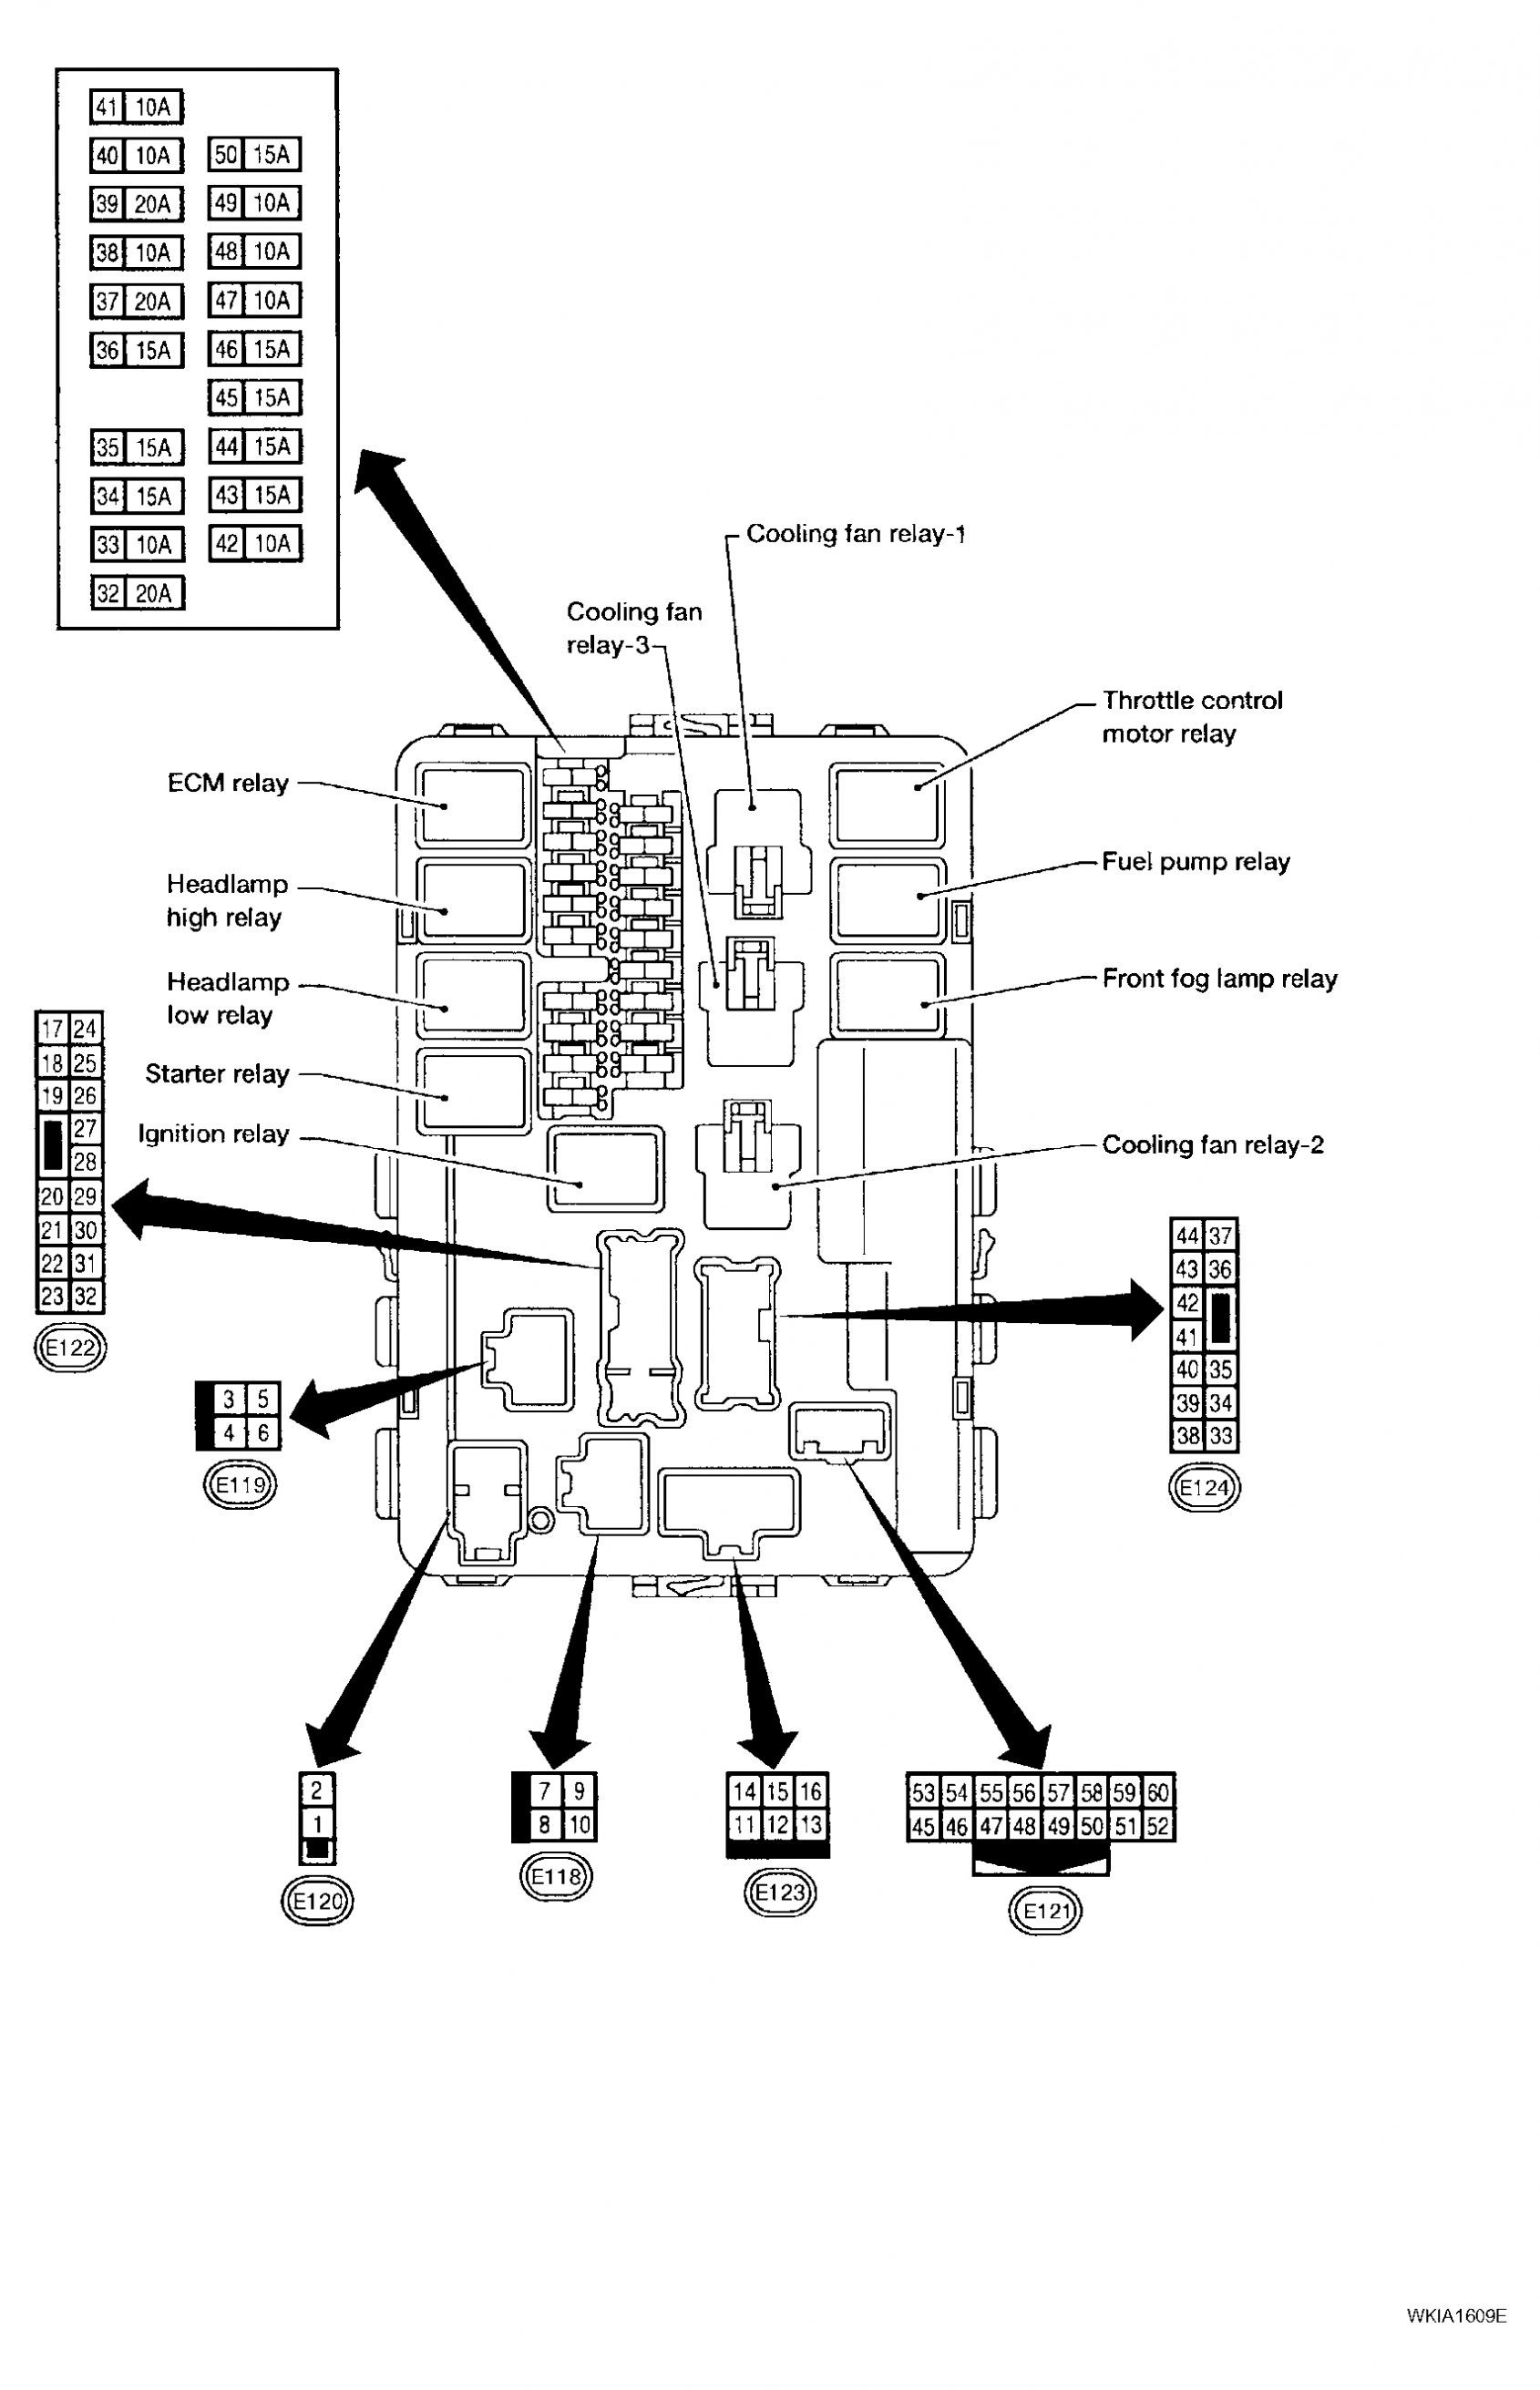 Nissan Pathfinder Engine Diagram 2000 Nissan Pathfinder Fuse Box Diagram Wiring Diagram Used Of Nissan Pathfinder Engine Diagram